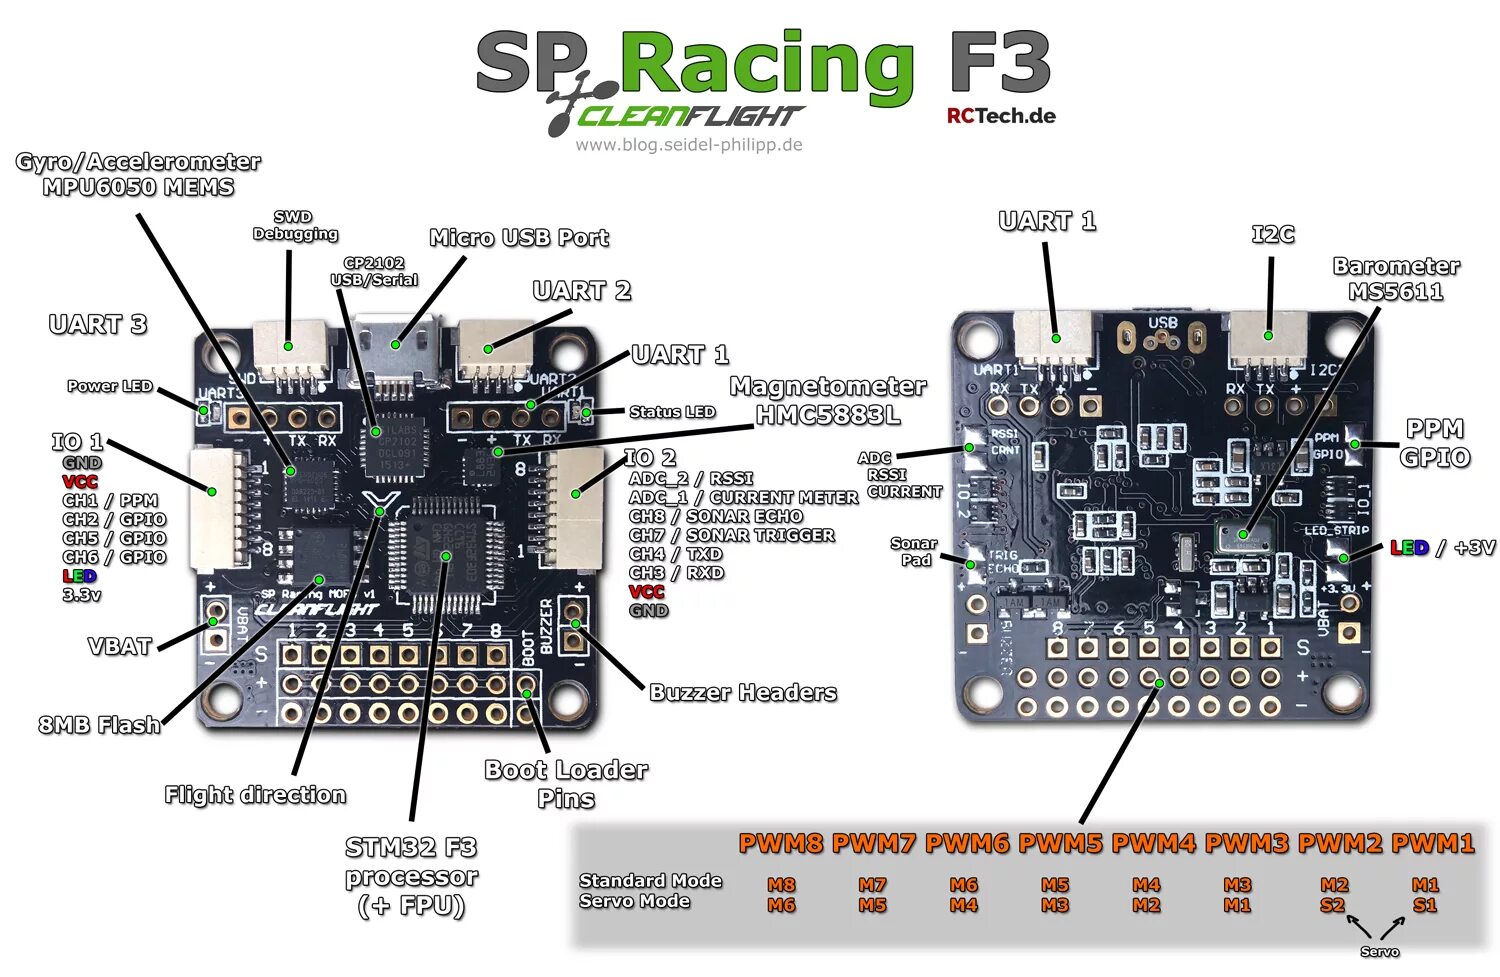 SP Racing f3. SP Racing f3 Deluxe. SP Racing Pro f3. SP Racing f3 v1. Cc3 3 32